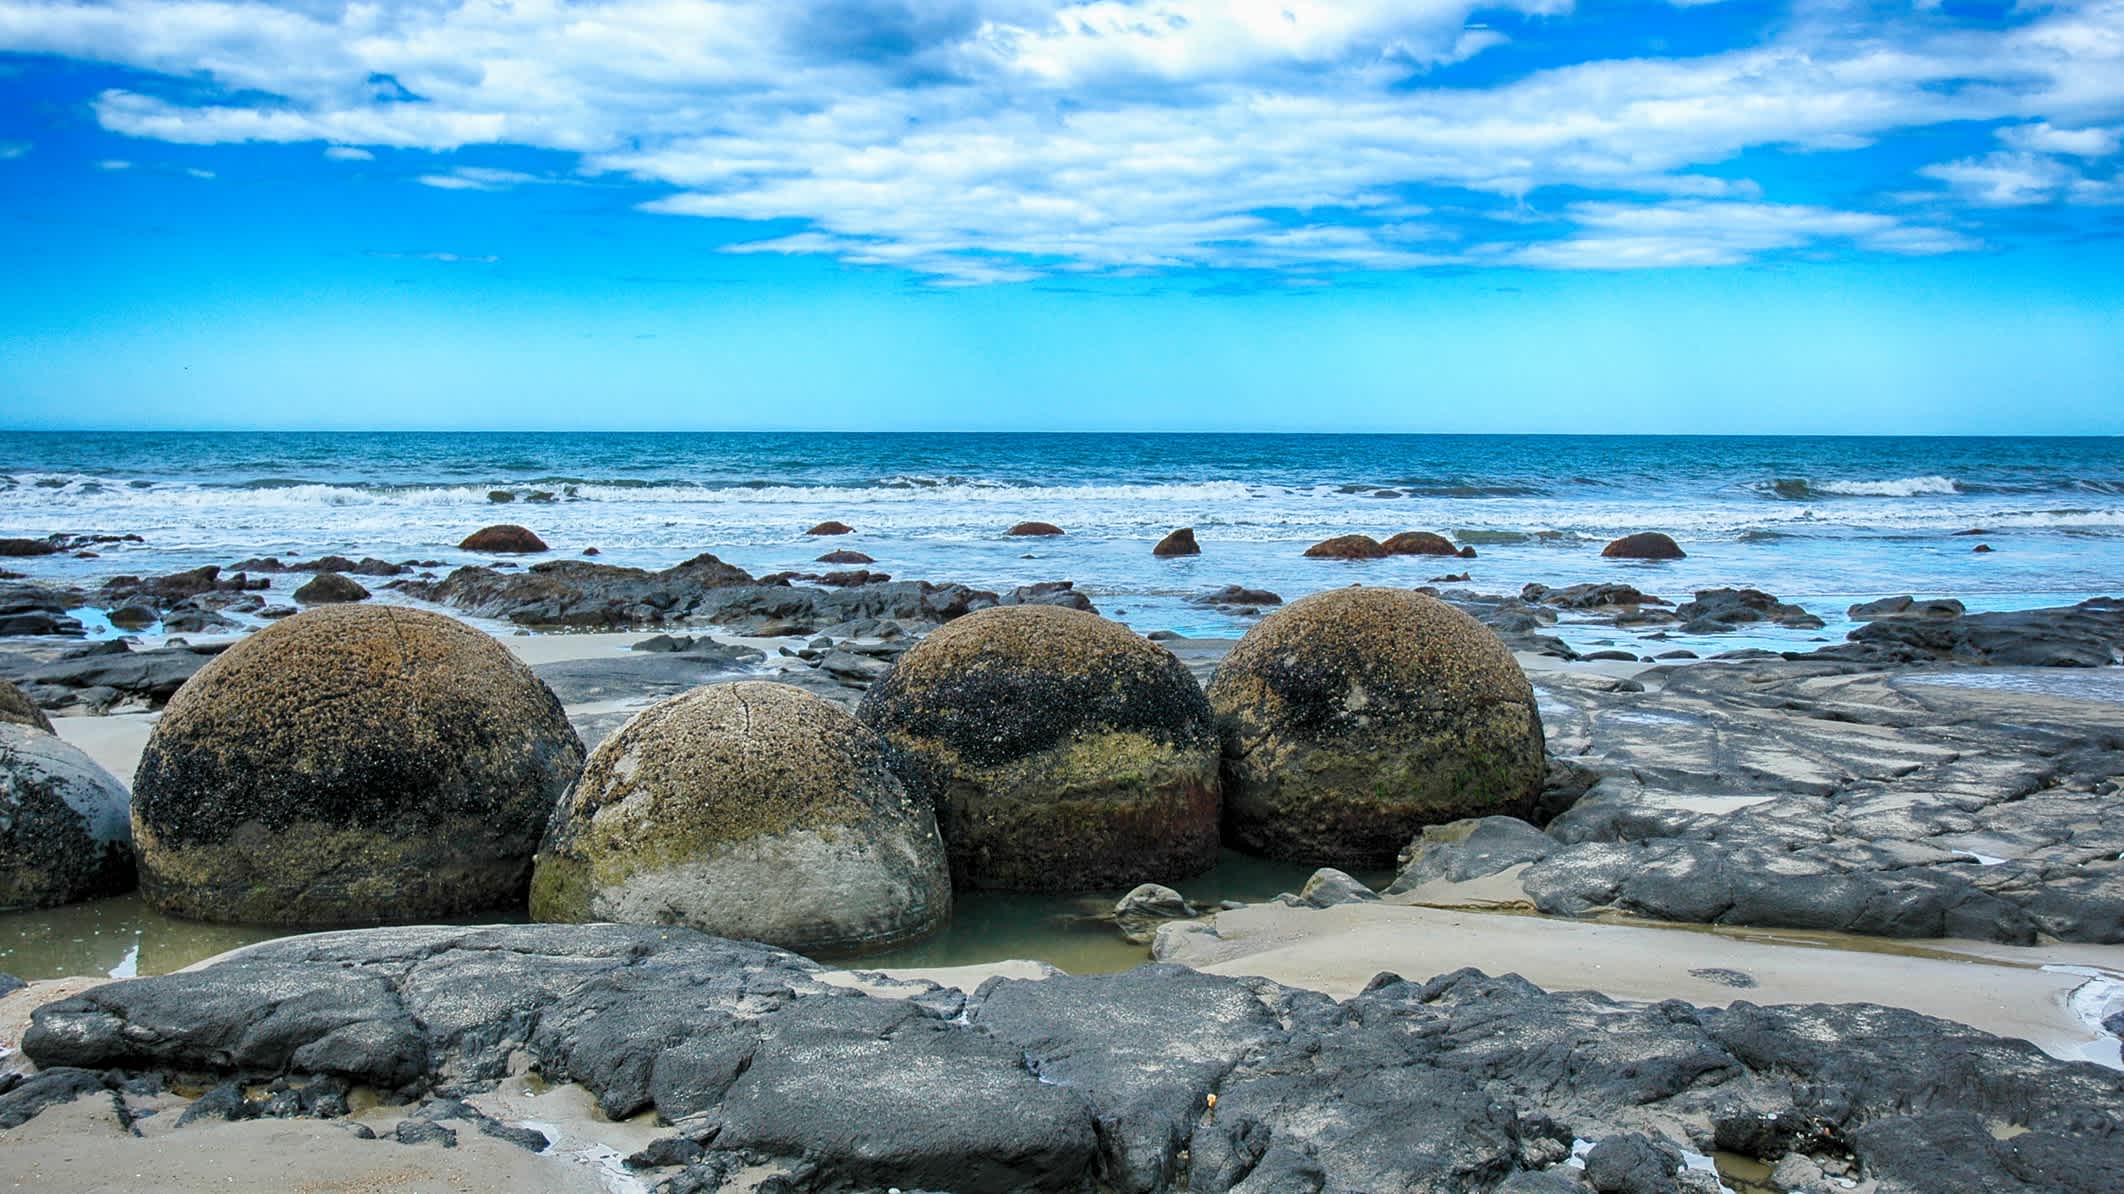 Moeraki Boulders am Koekohe Beach in der Nähe von Oamaru, Neuseeland.